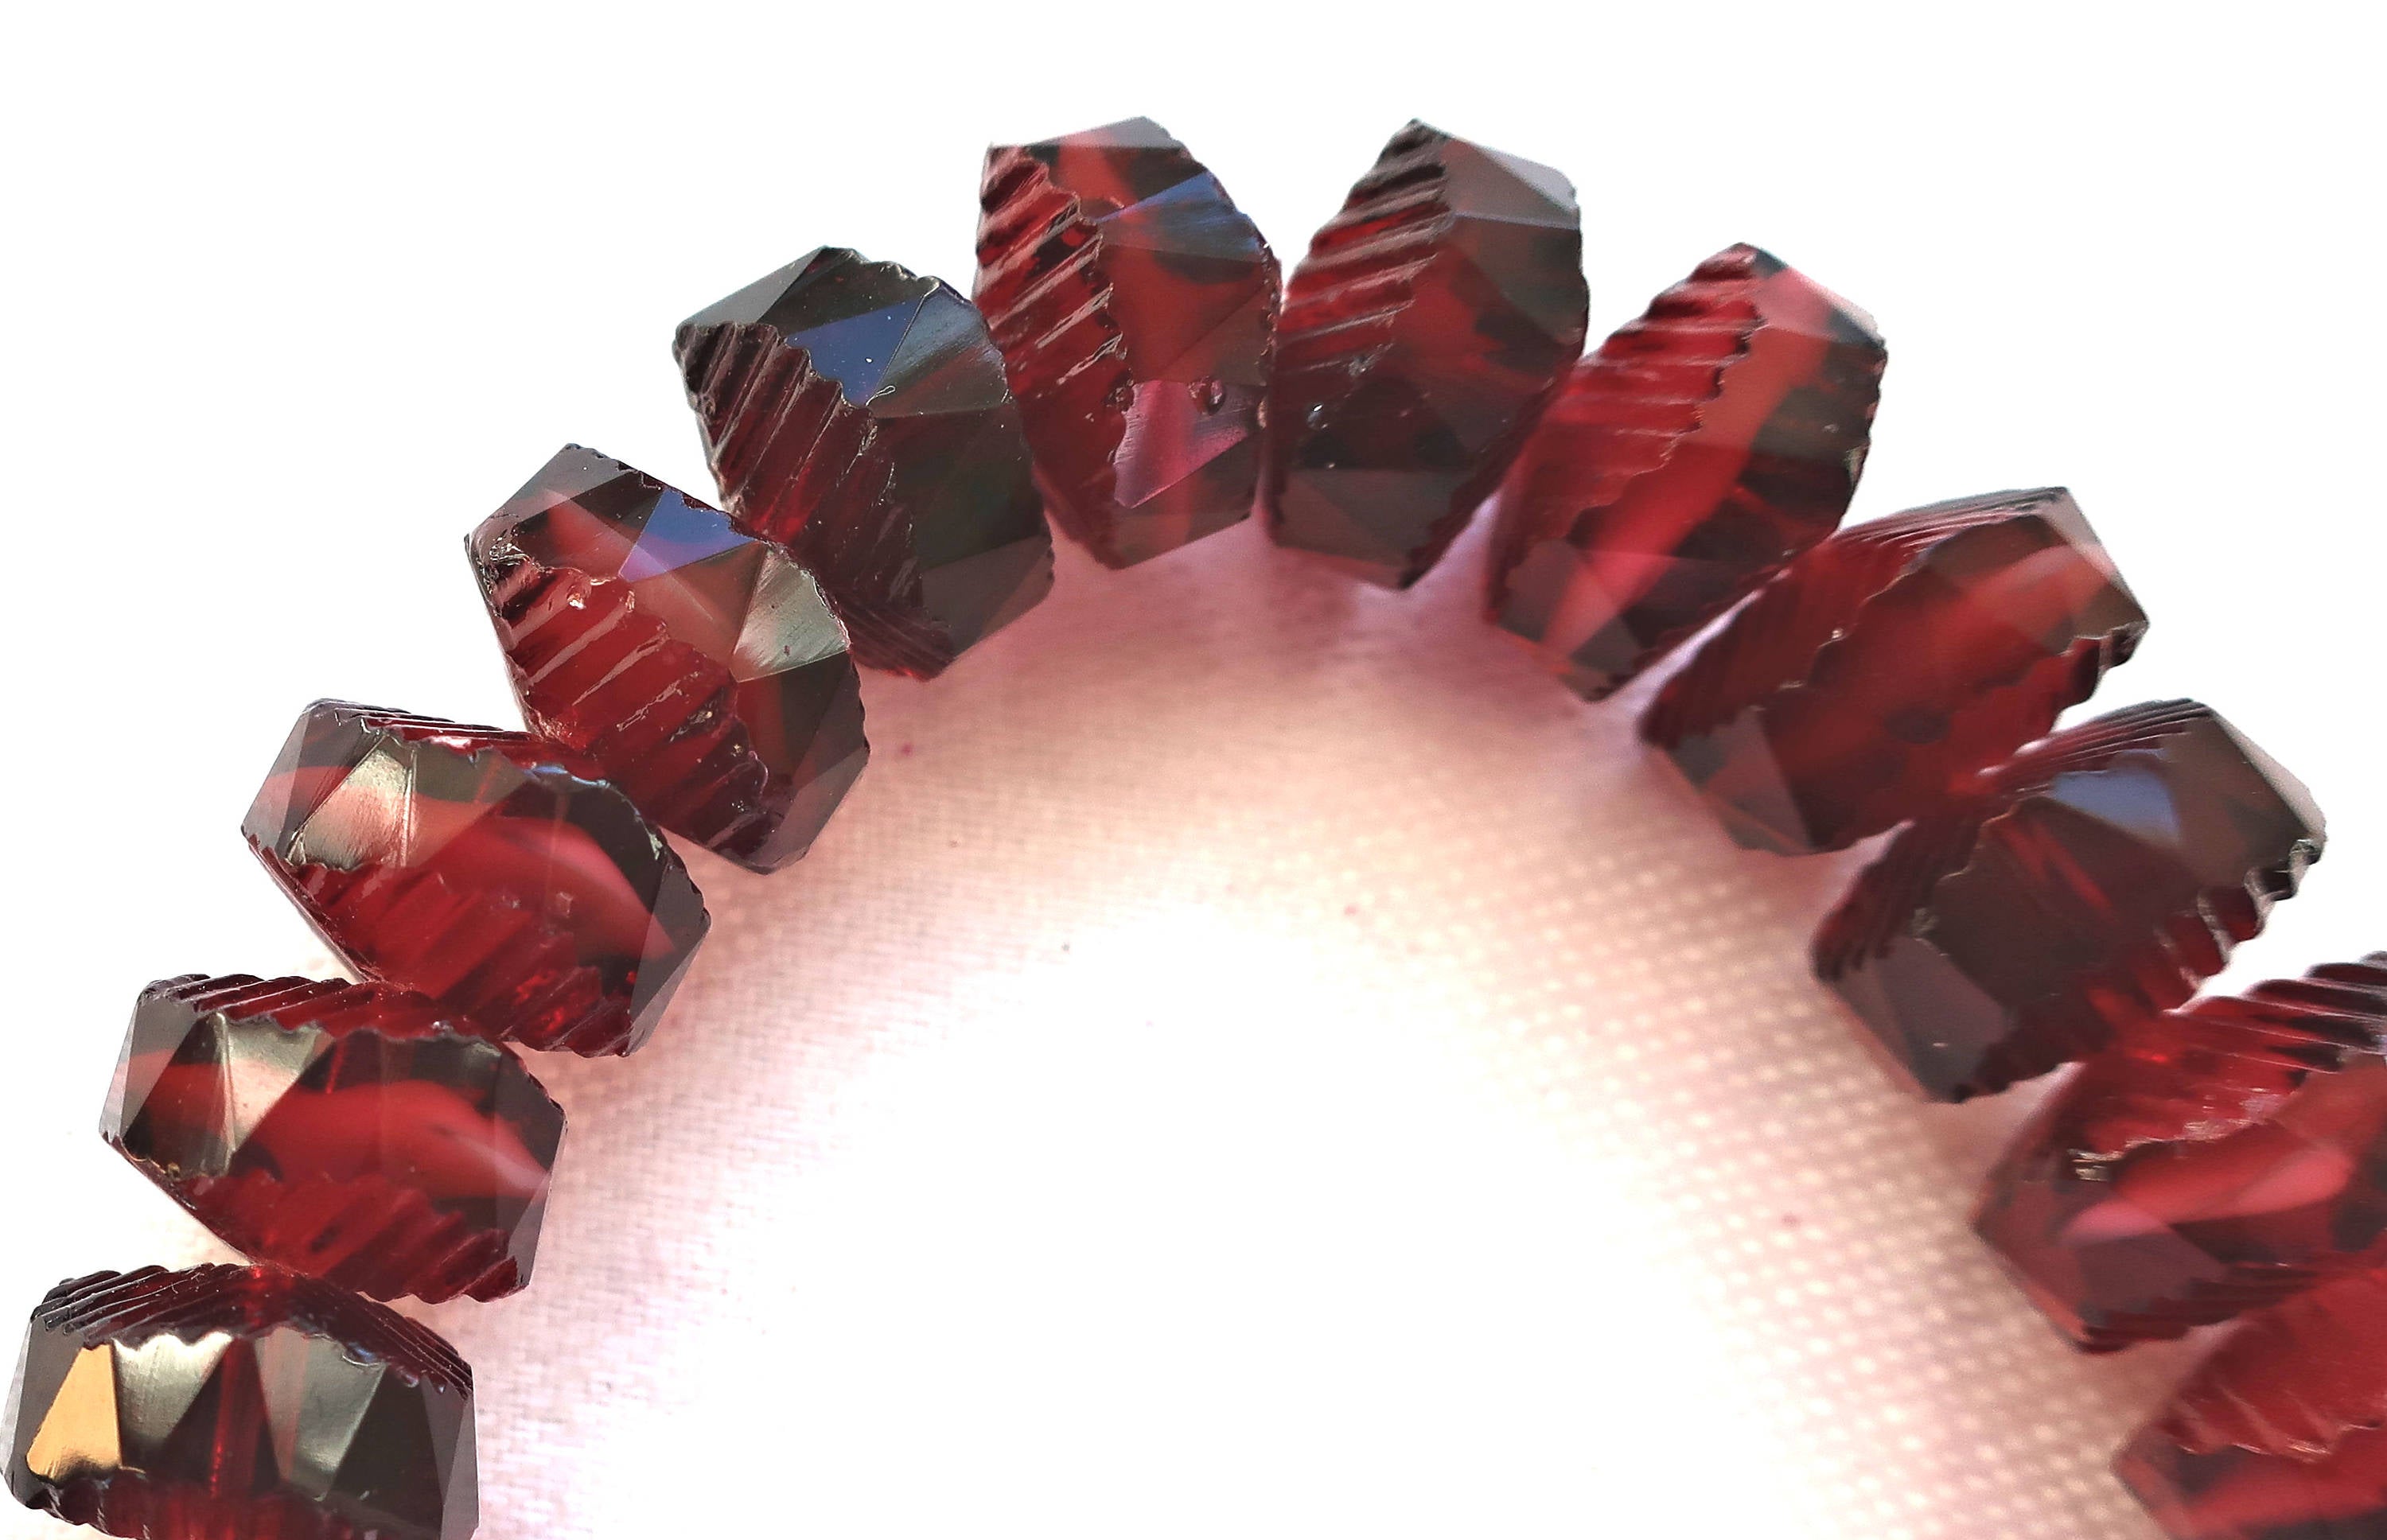 Lot of 6 Czech glass large heart beads - 16 x 15mm opaque red heart sh –  Glorious Glass Beads